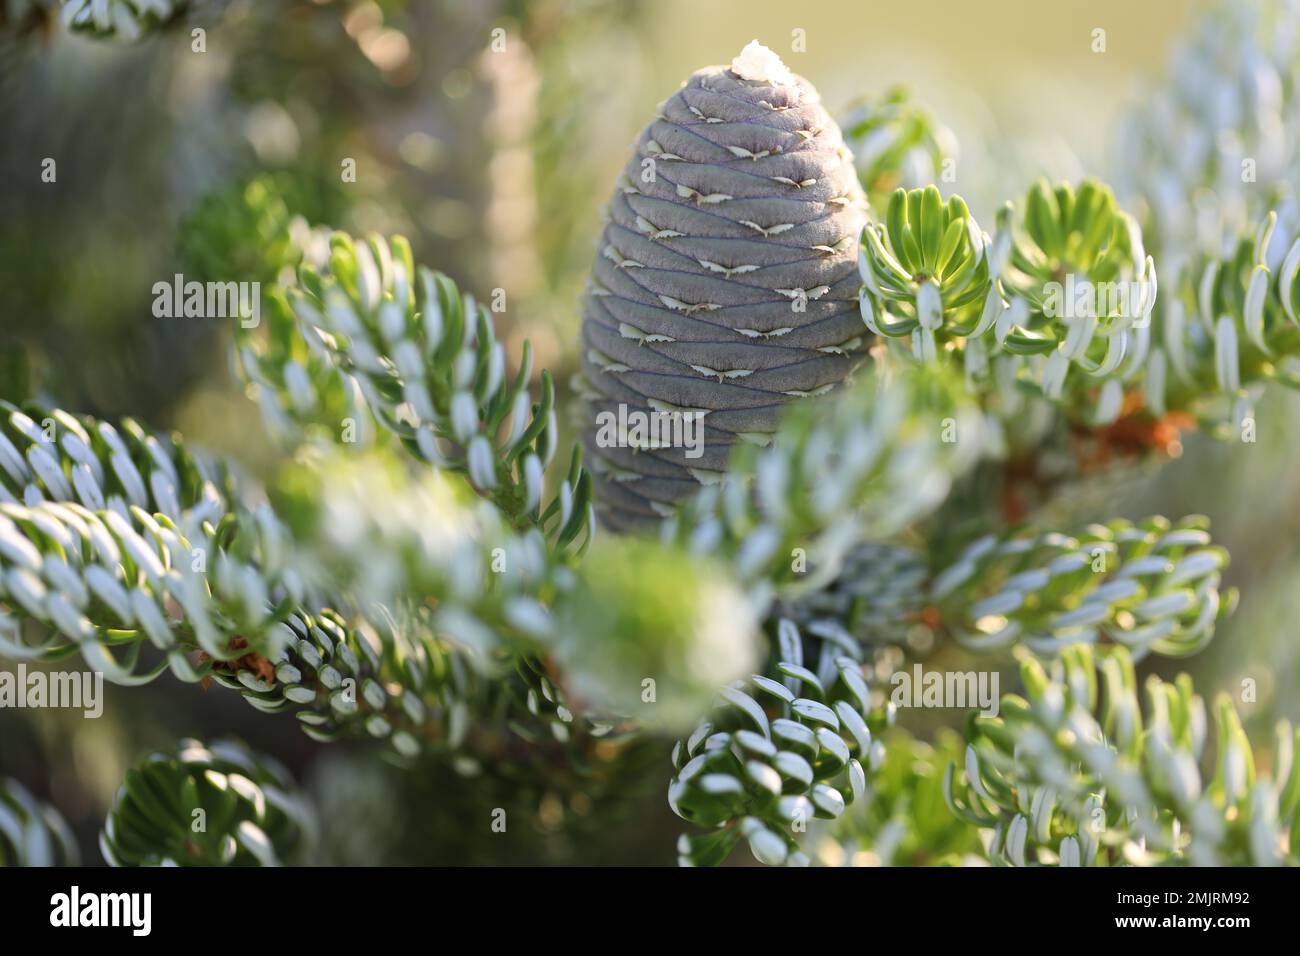 pine cones on a branch in spring garden Stock Photo